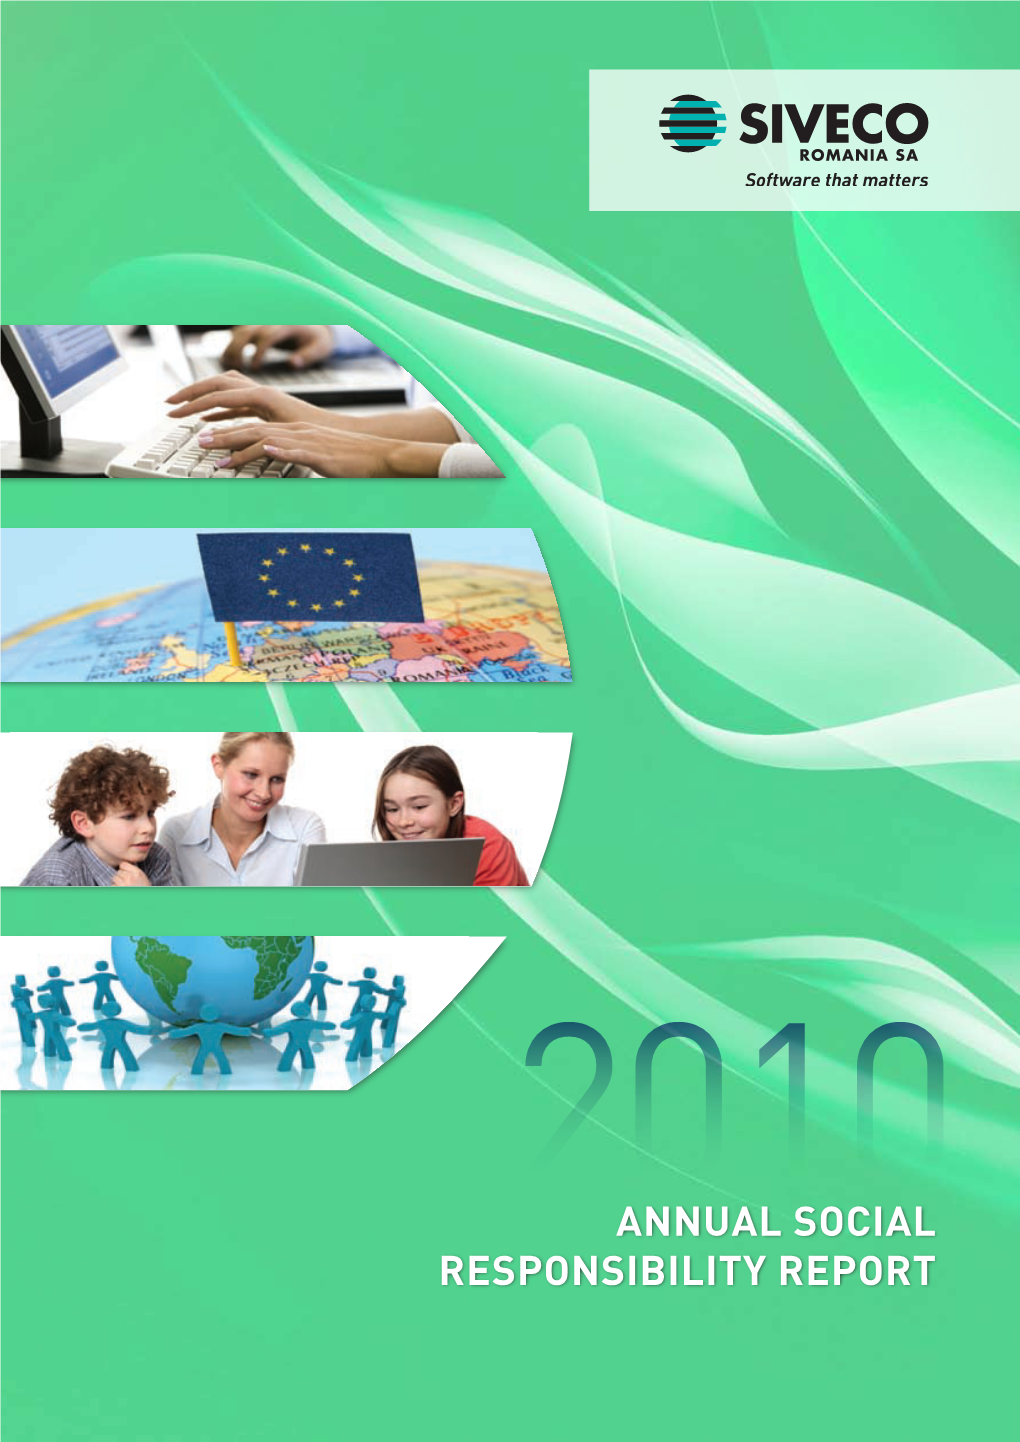 Annual Social Responsibility Report